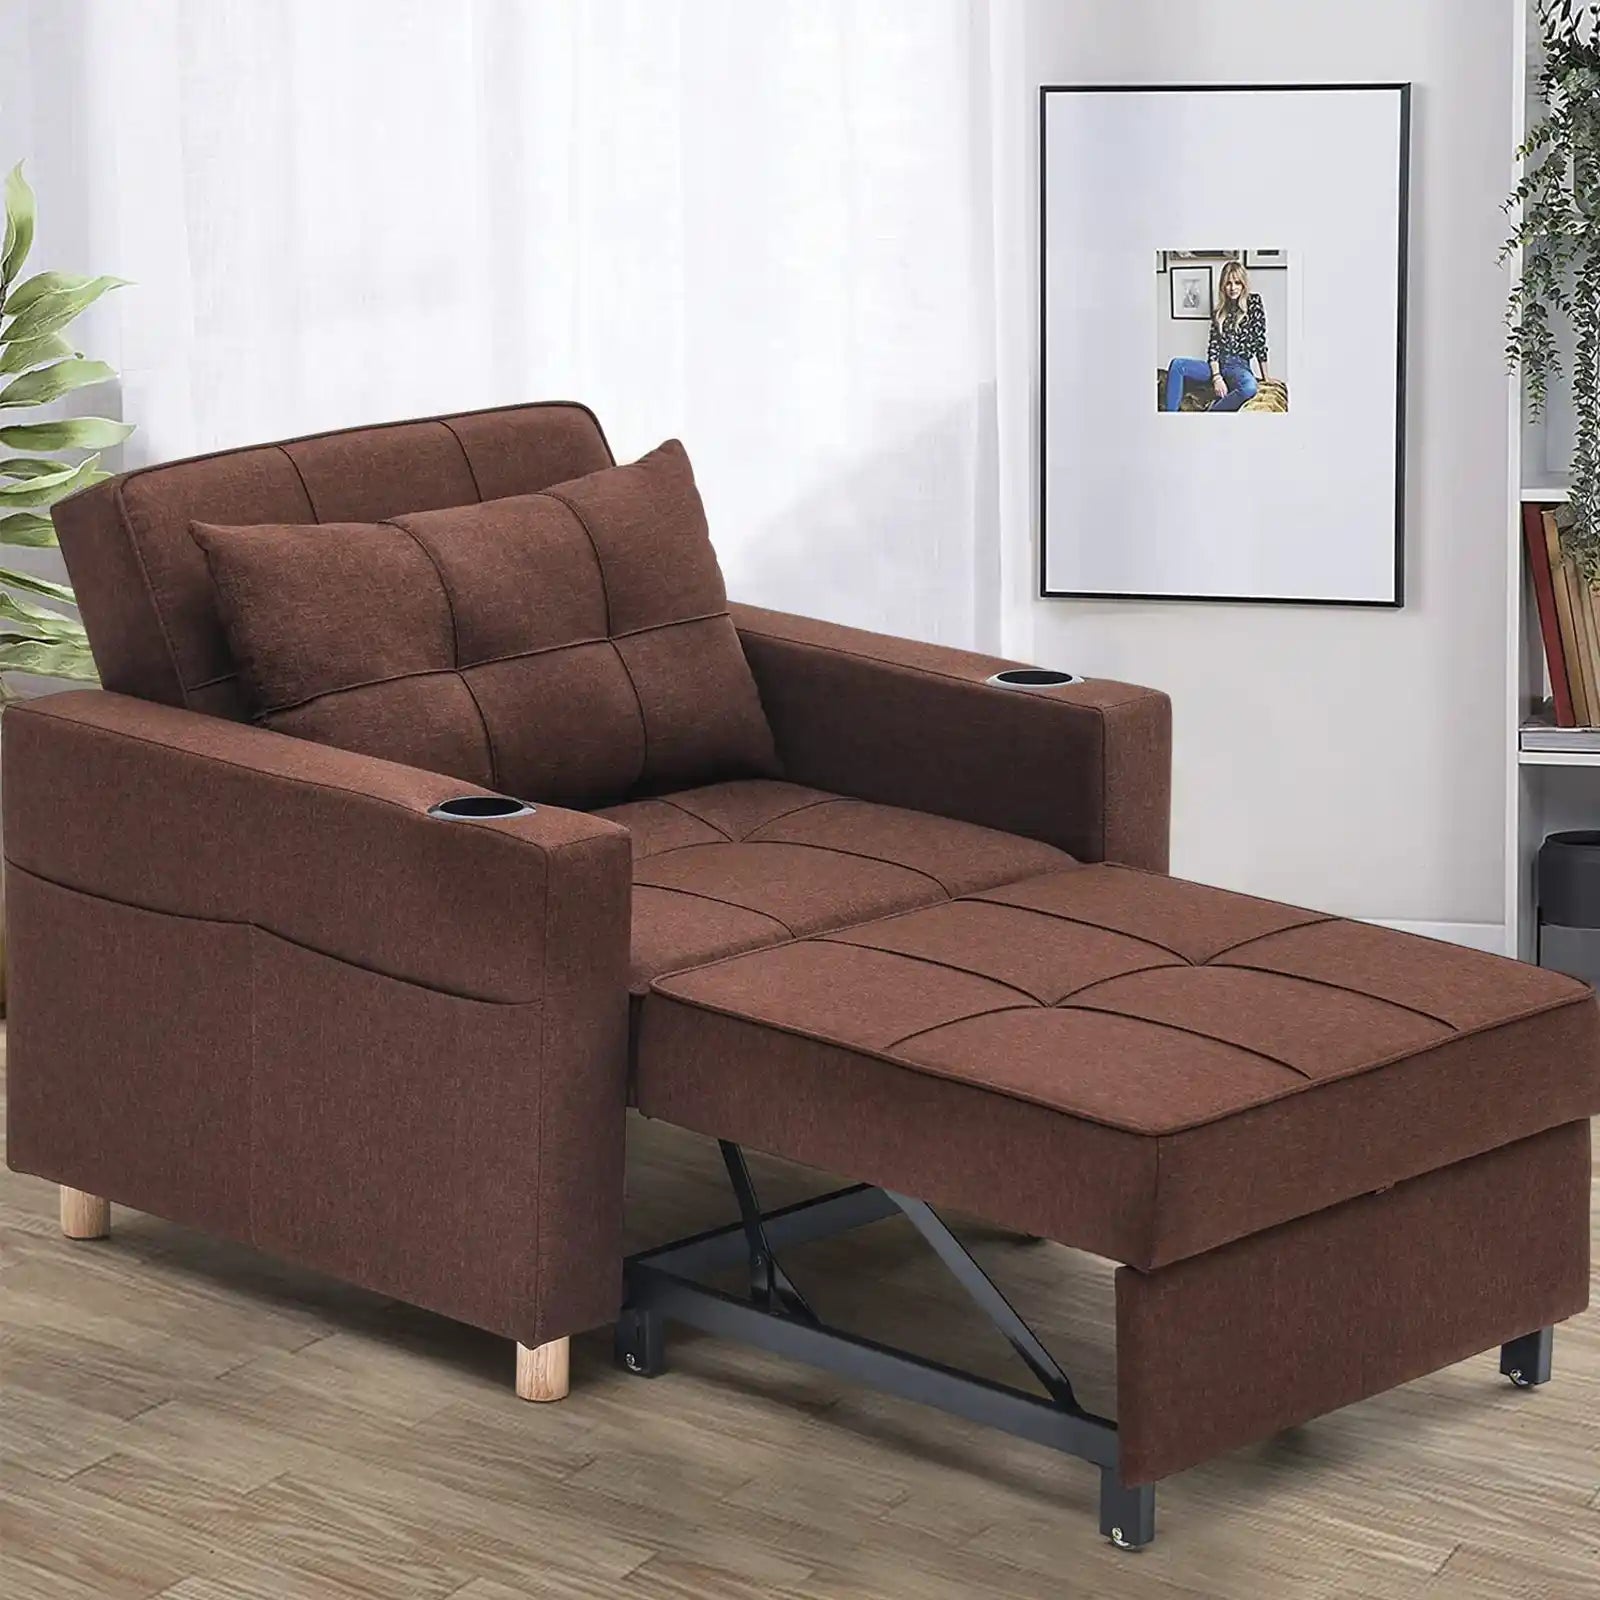 Esright Silla cama convertible 3 en 1, cama de sillón, reclinable,  ajustable, multifuncional, sofá cama, silla de cama individual con tela de  lino